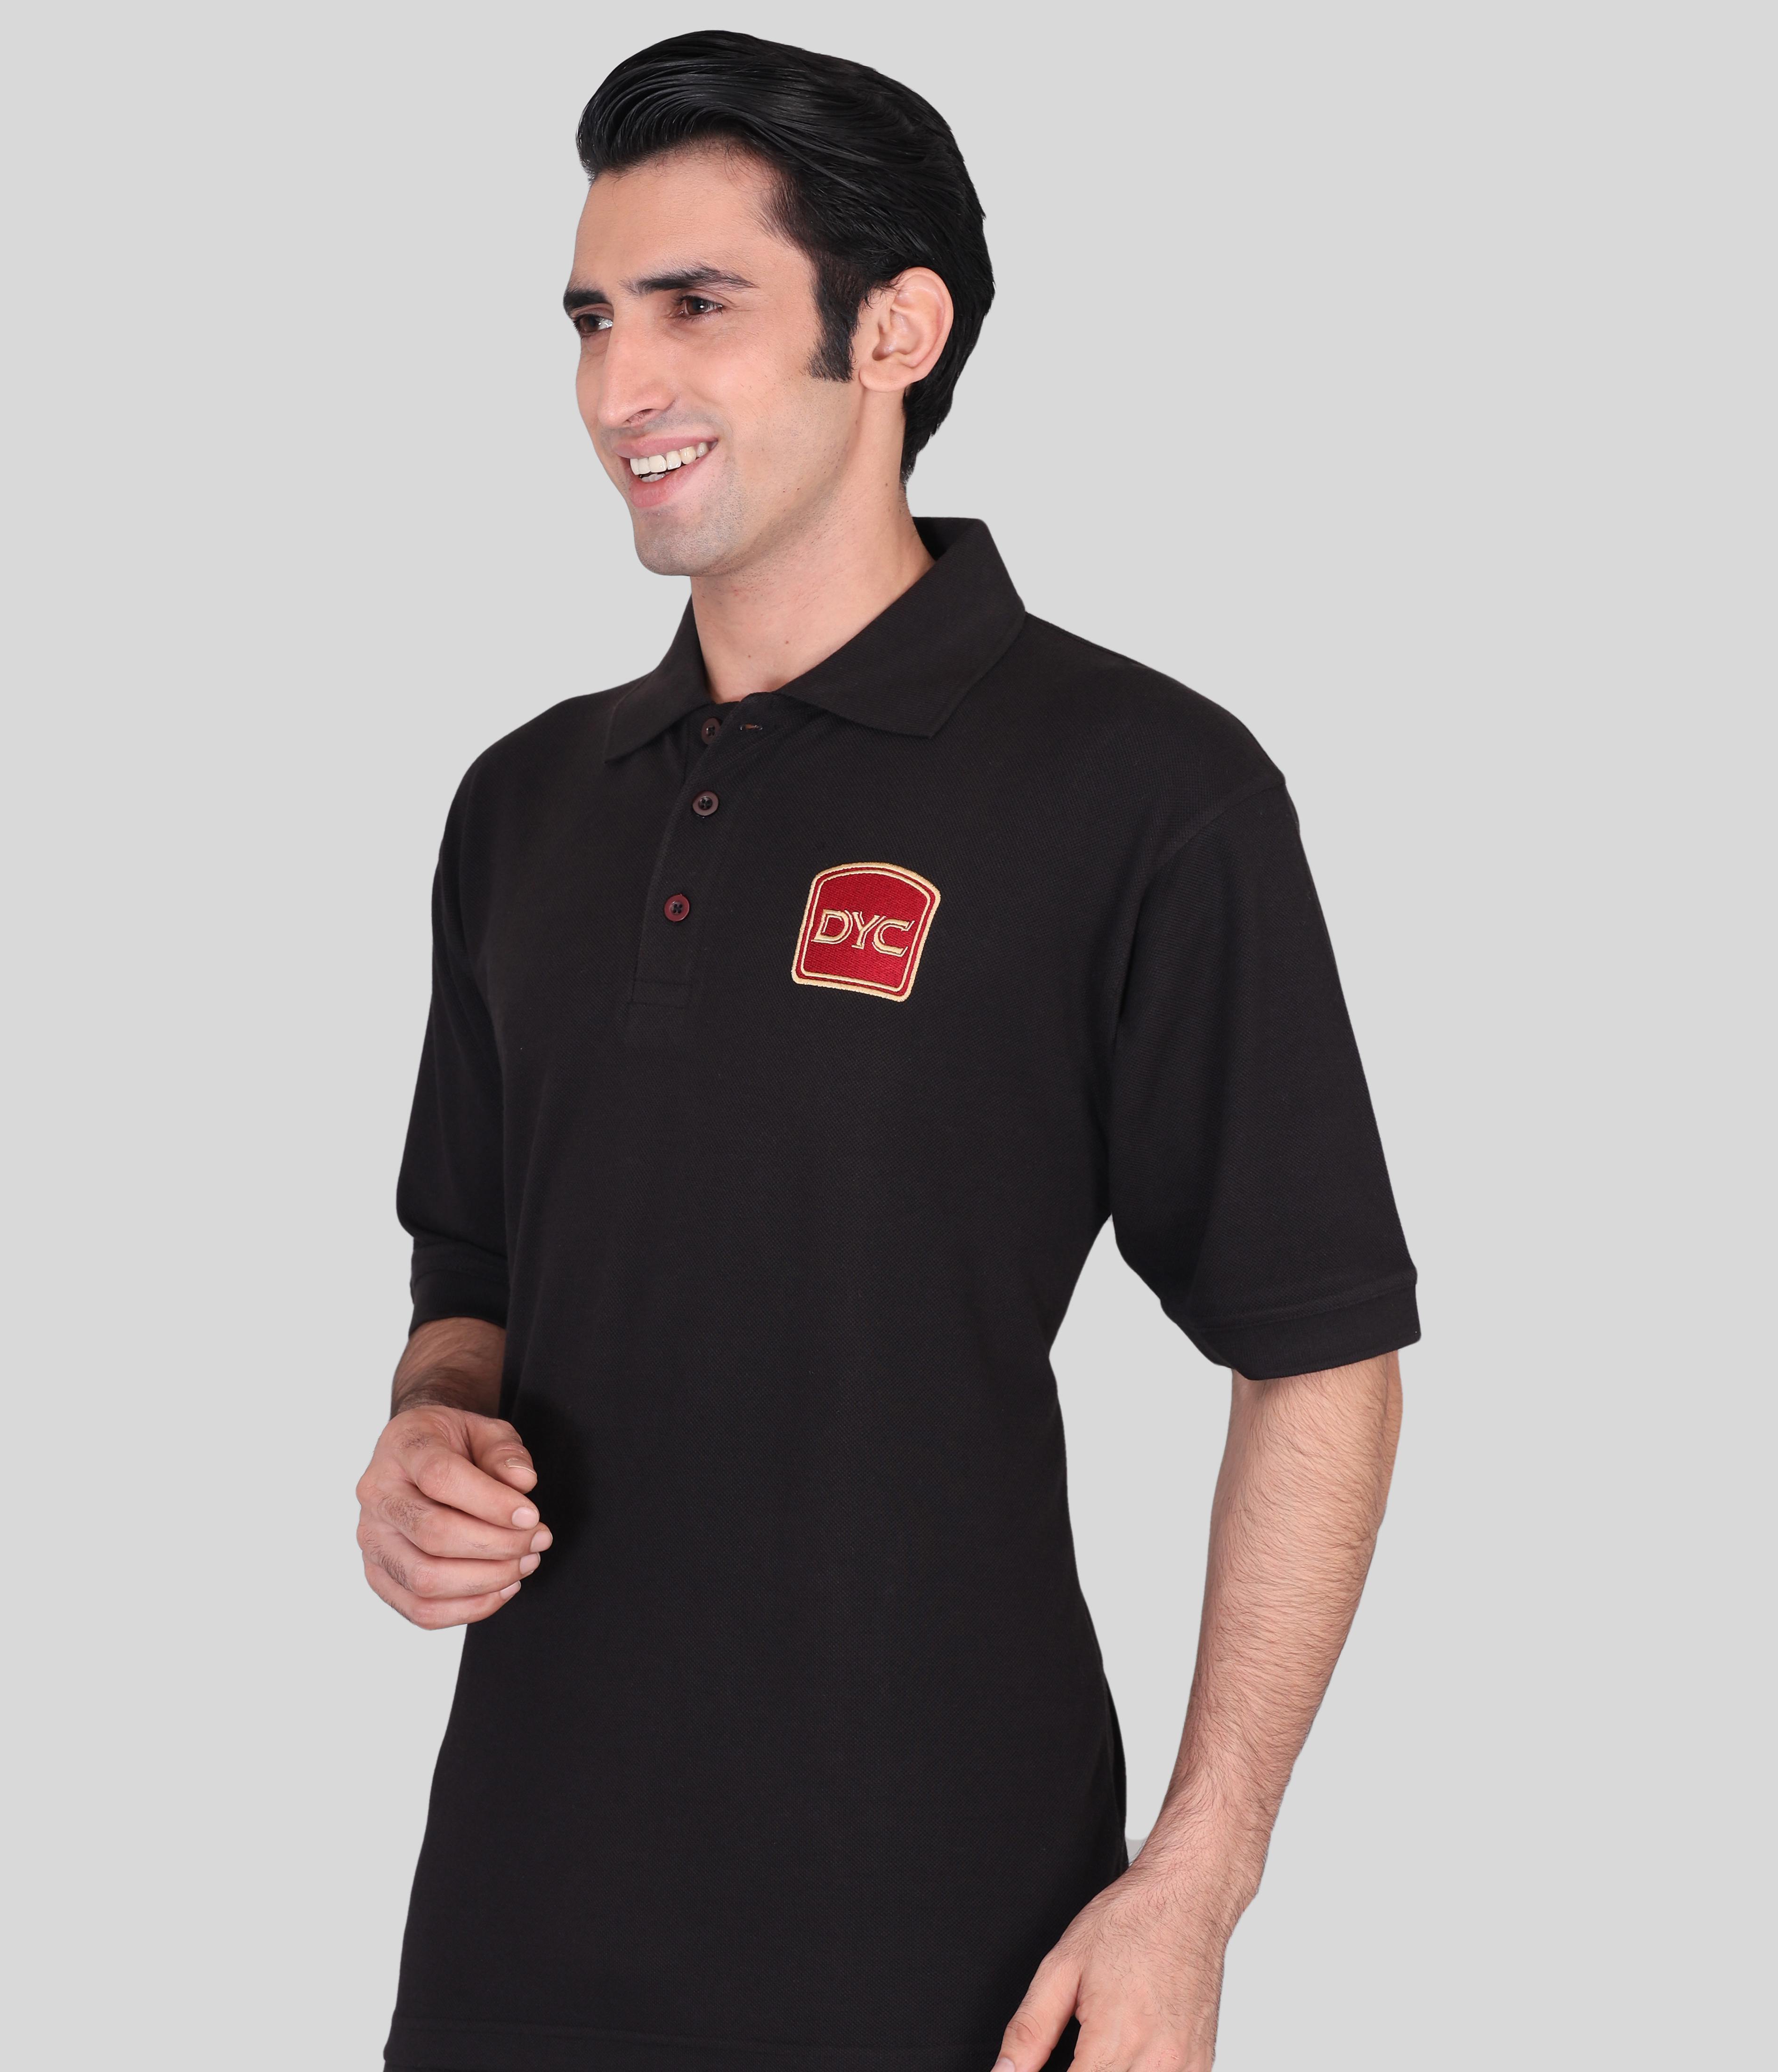 Dyc black custom polo t-shirts with company logo